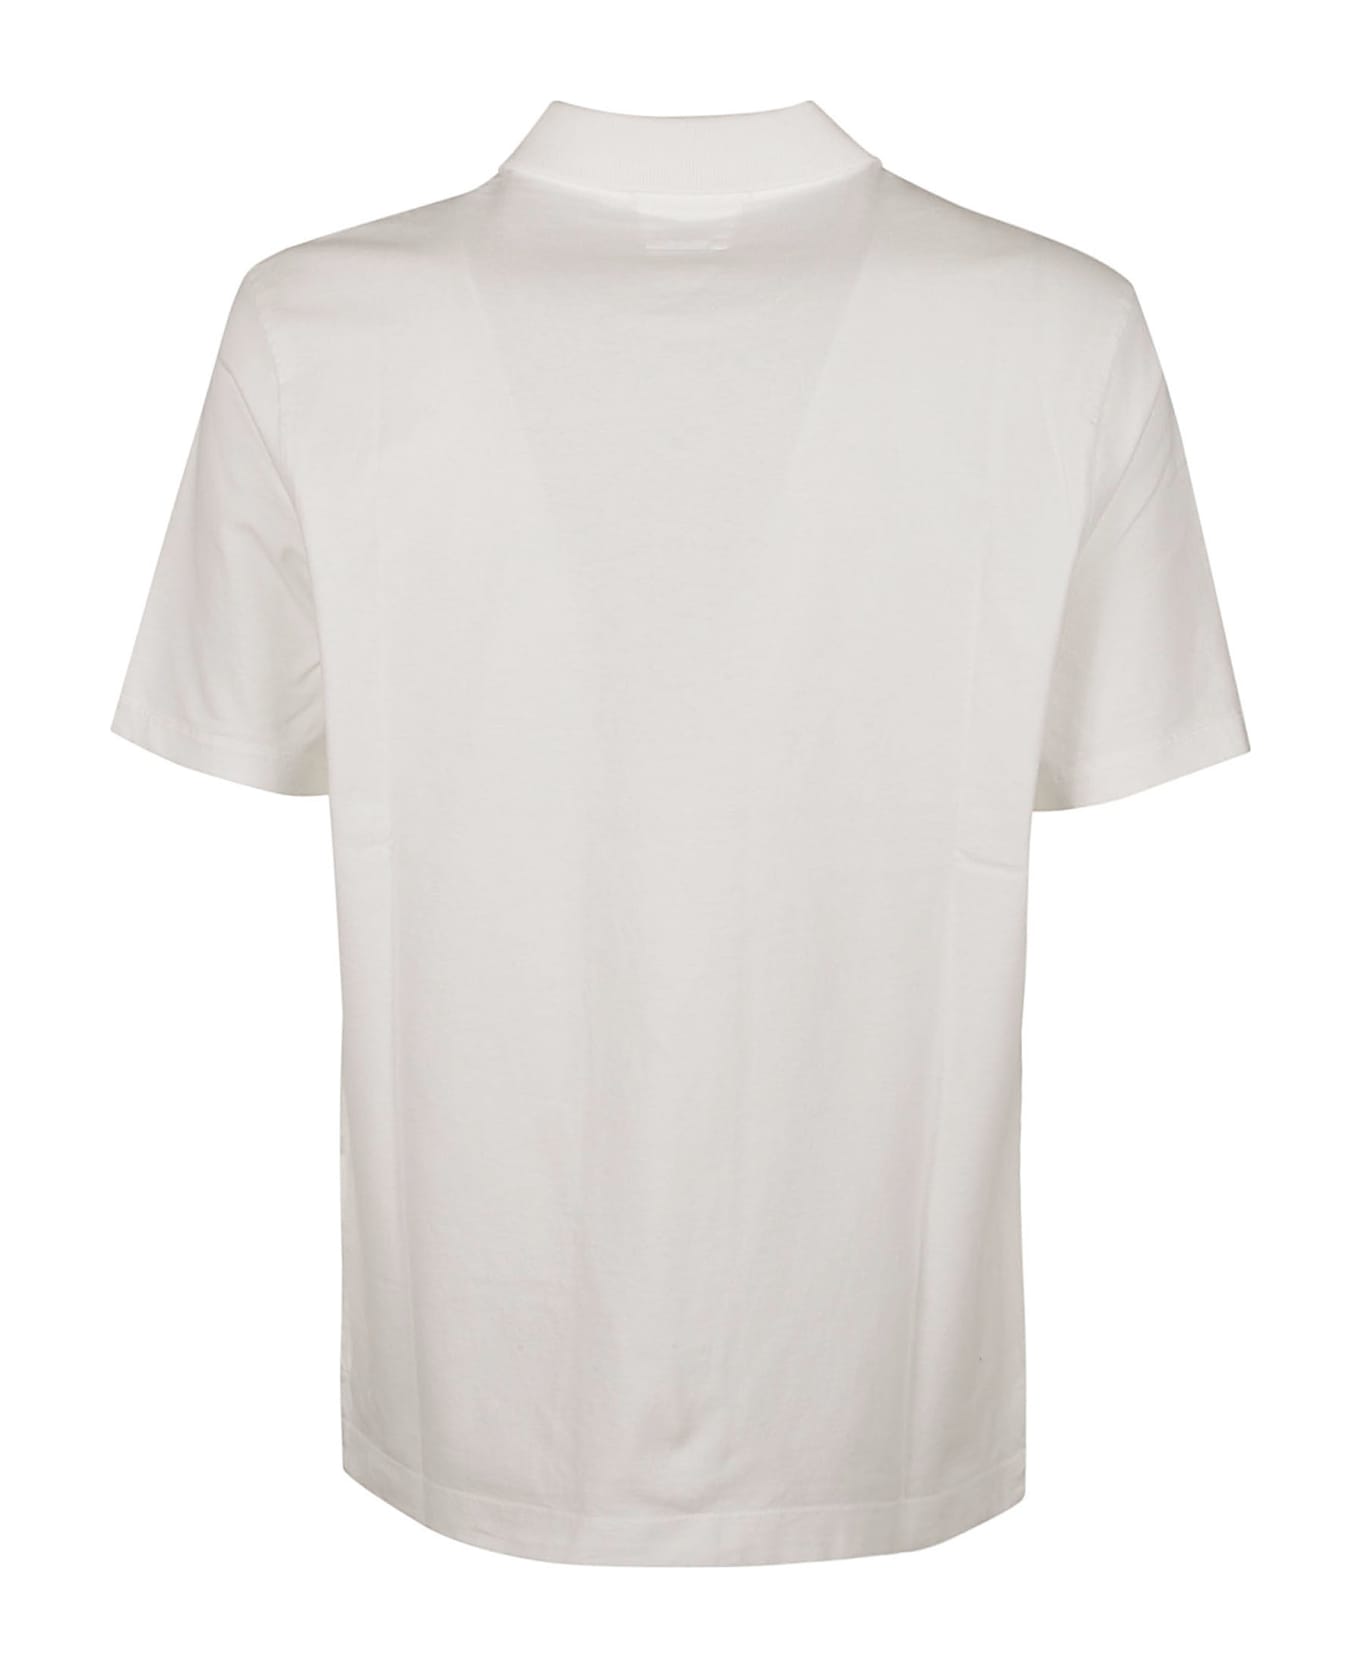 C.P. Company 1020 Short-sleeved Polo Shirt - Gauze white